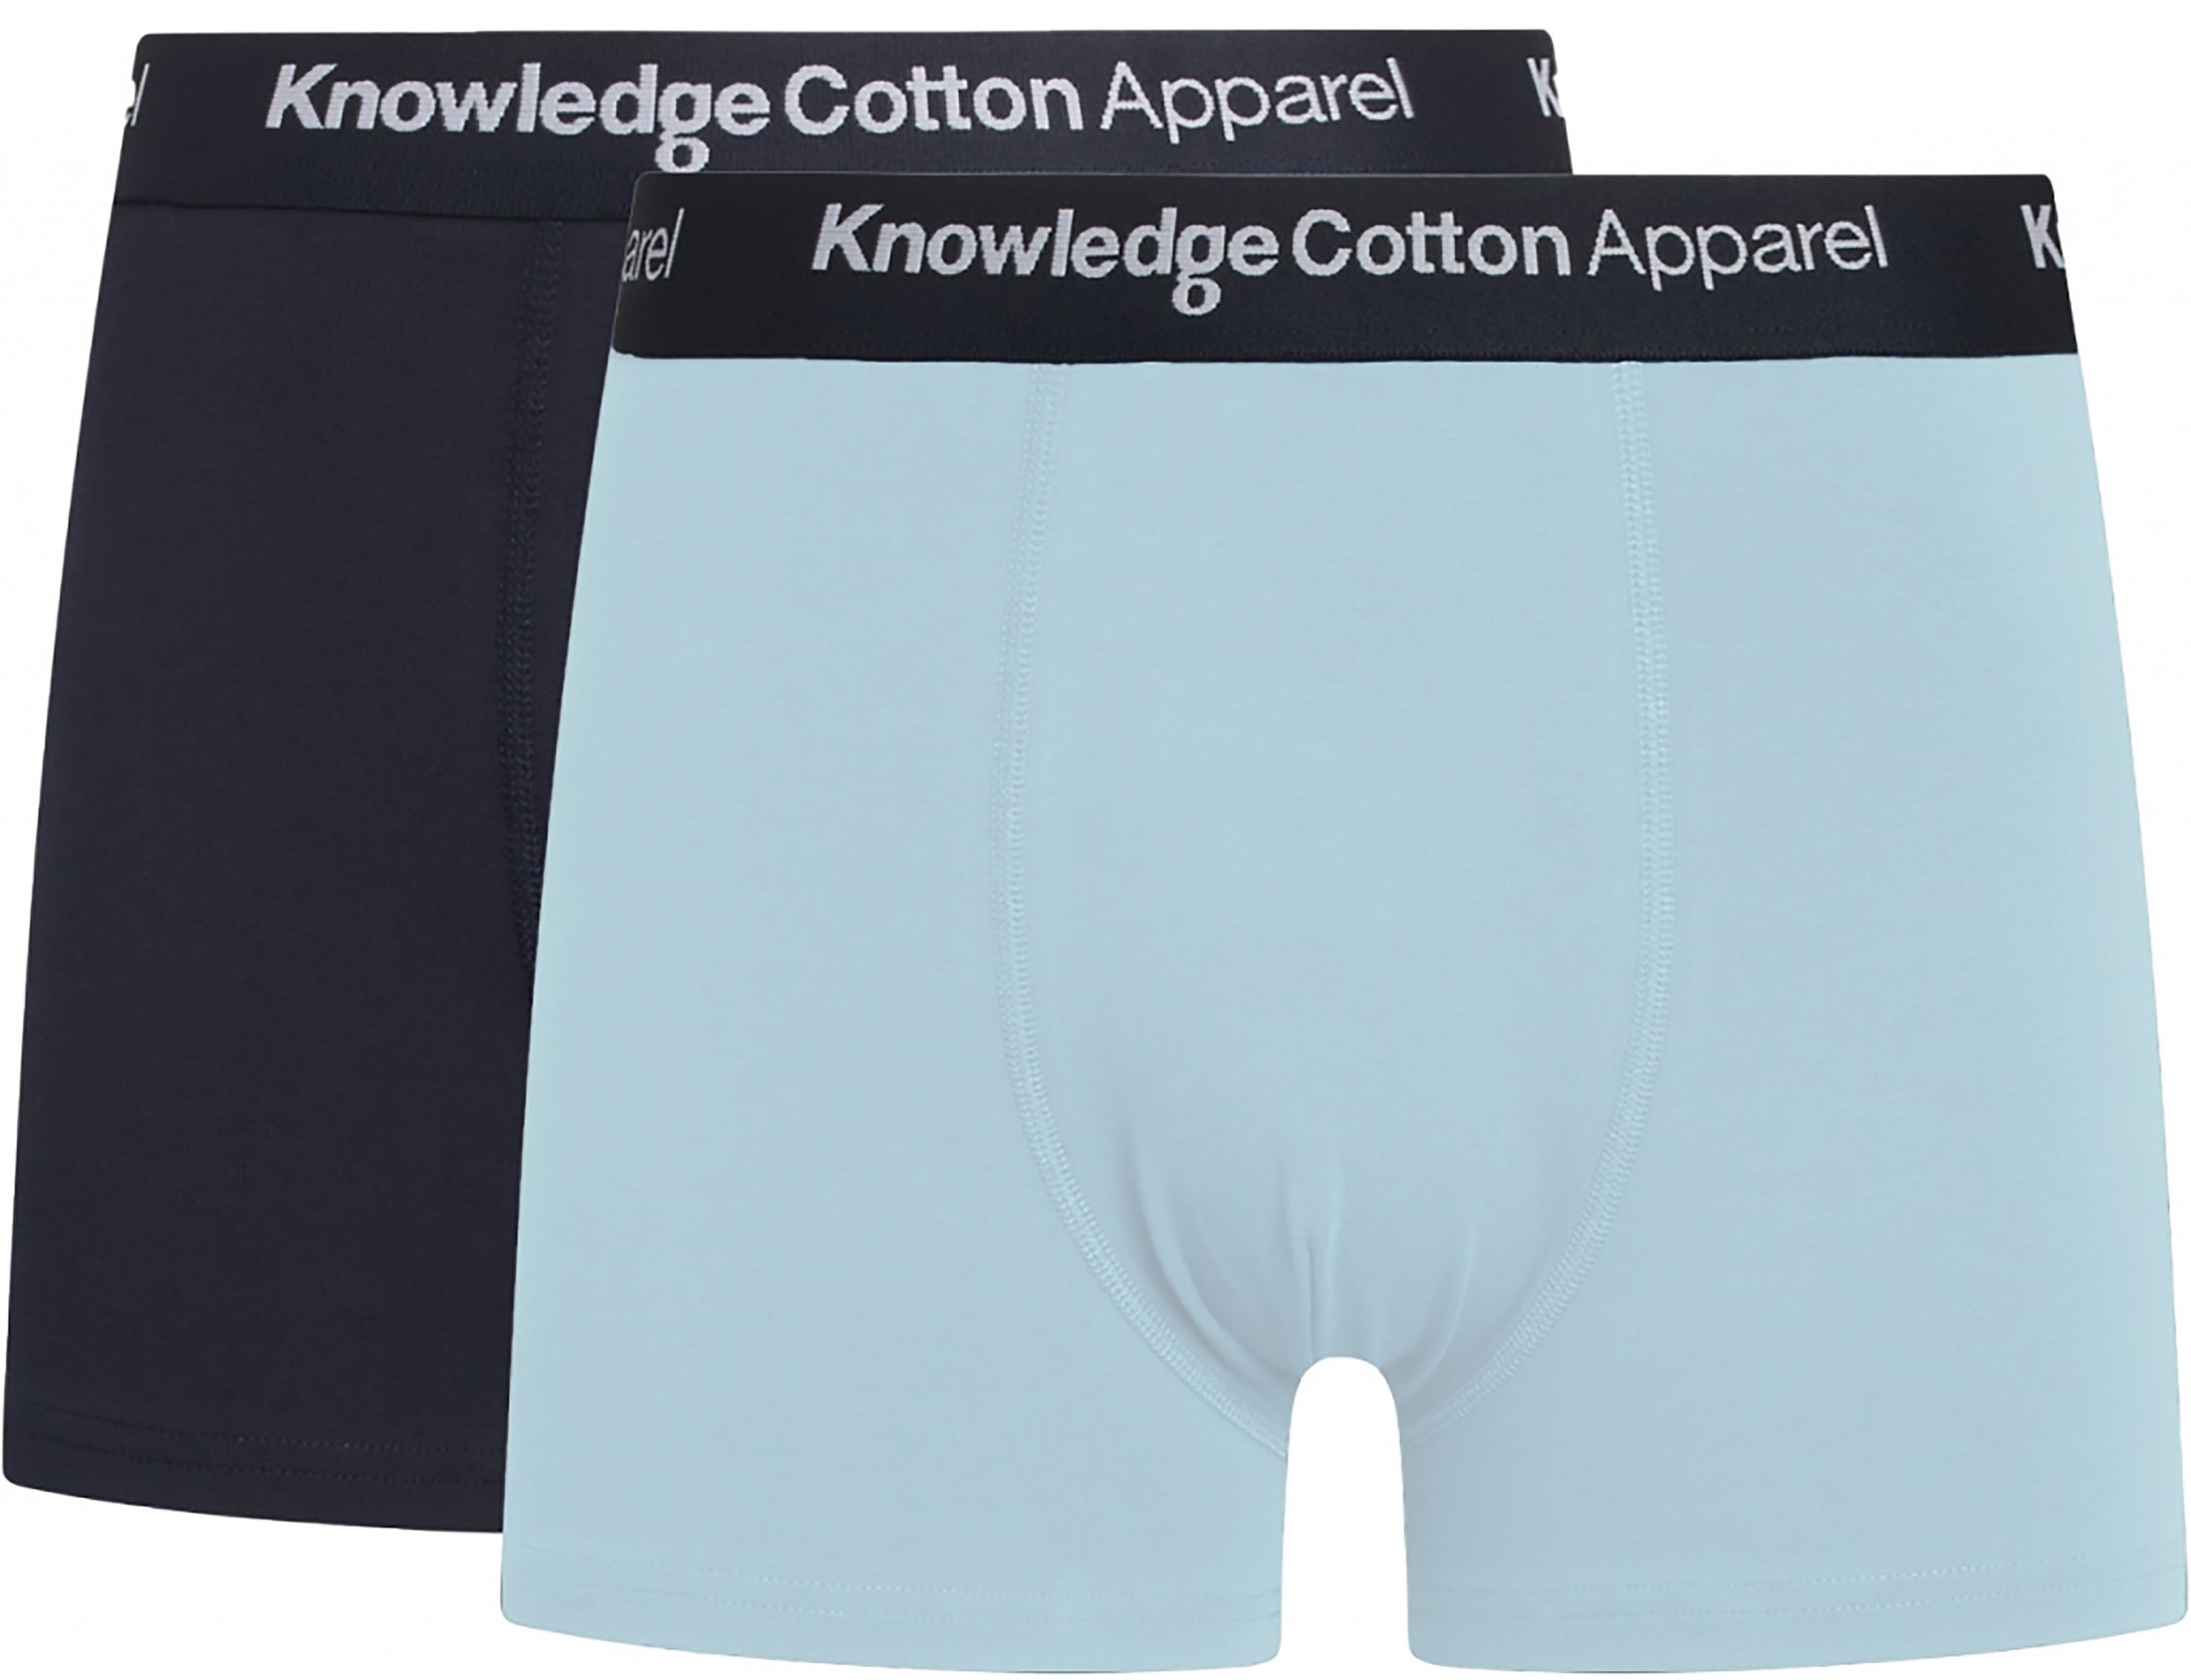 KnowledgeCotton Apparel Boxer Shorts Maple 2-Pack Light Dark Blue Blue size XL